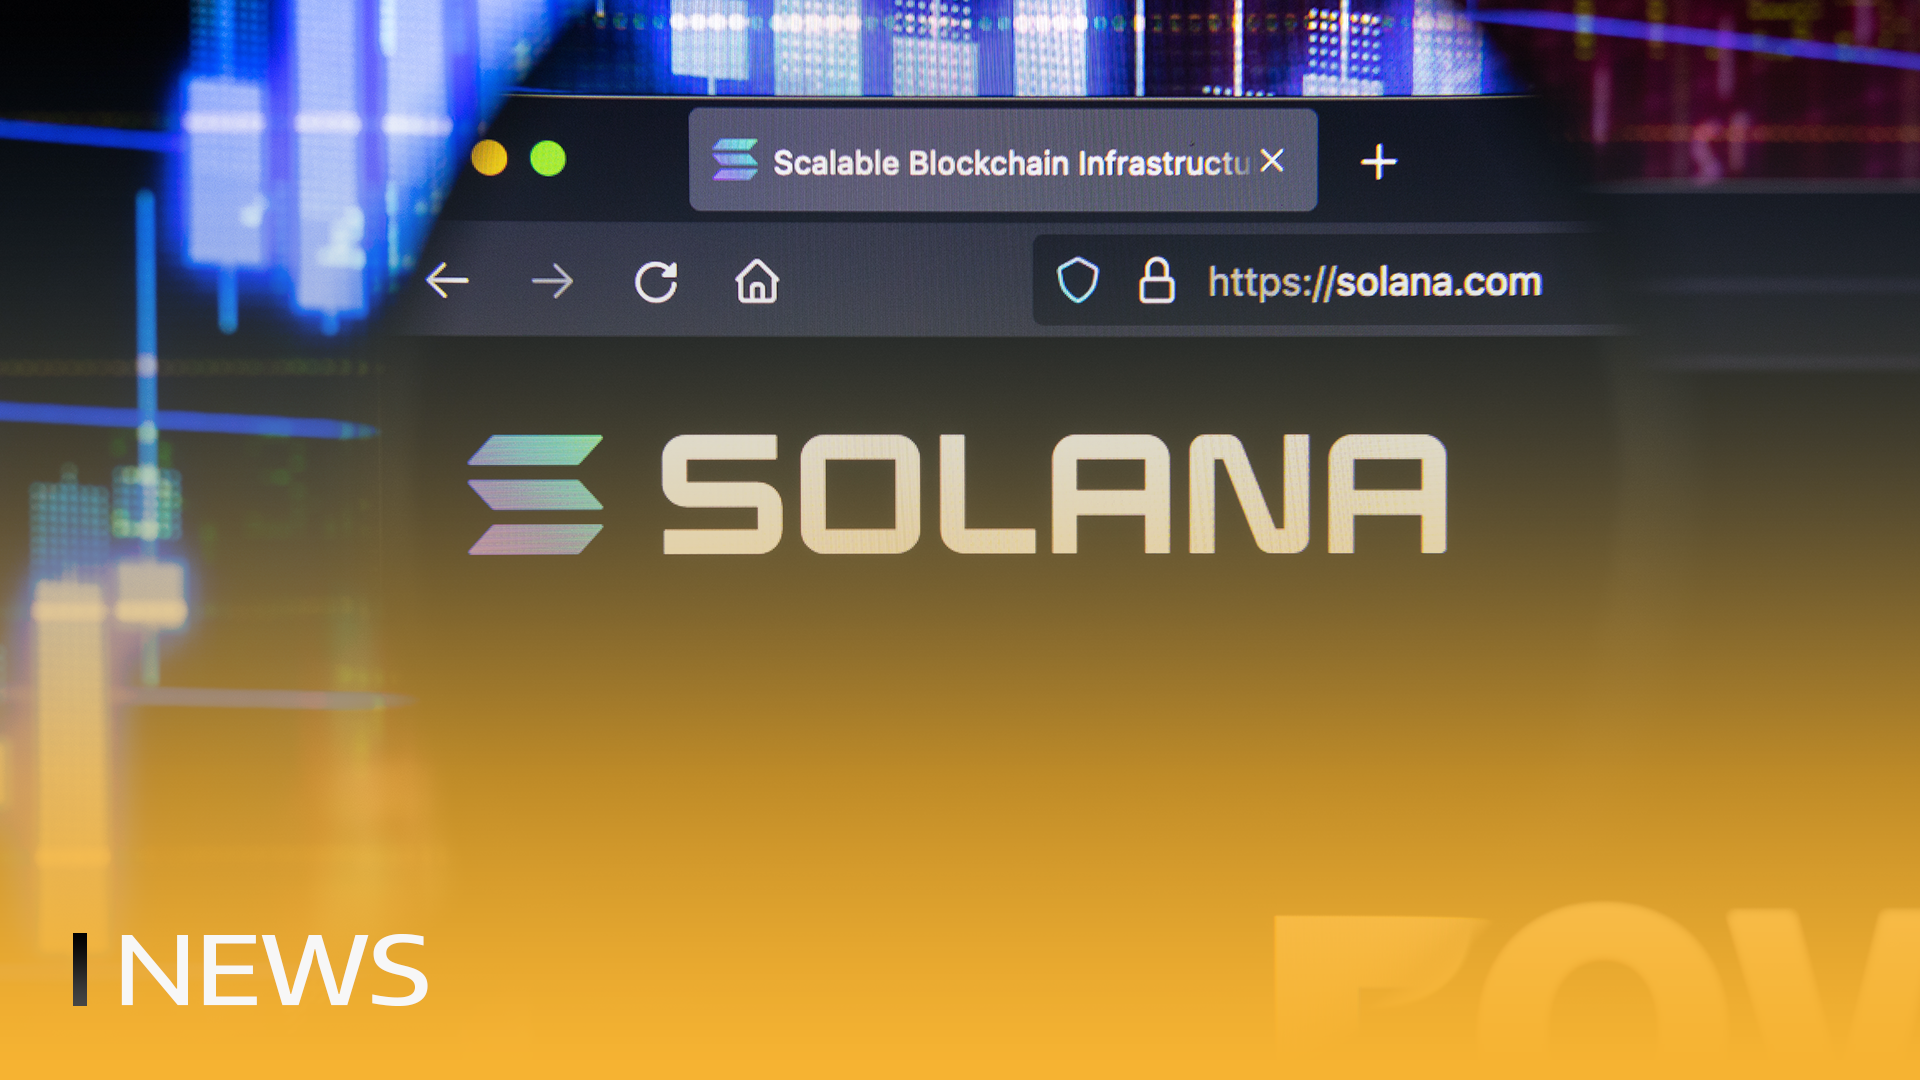 Zanimanje za Solano se v Googlu povzpne nad Ethereum